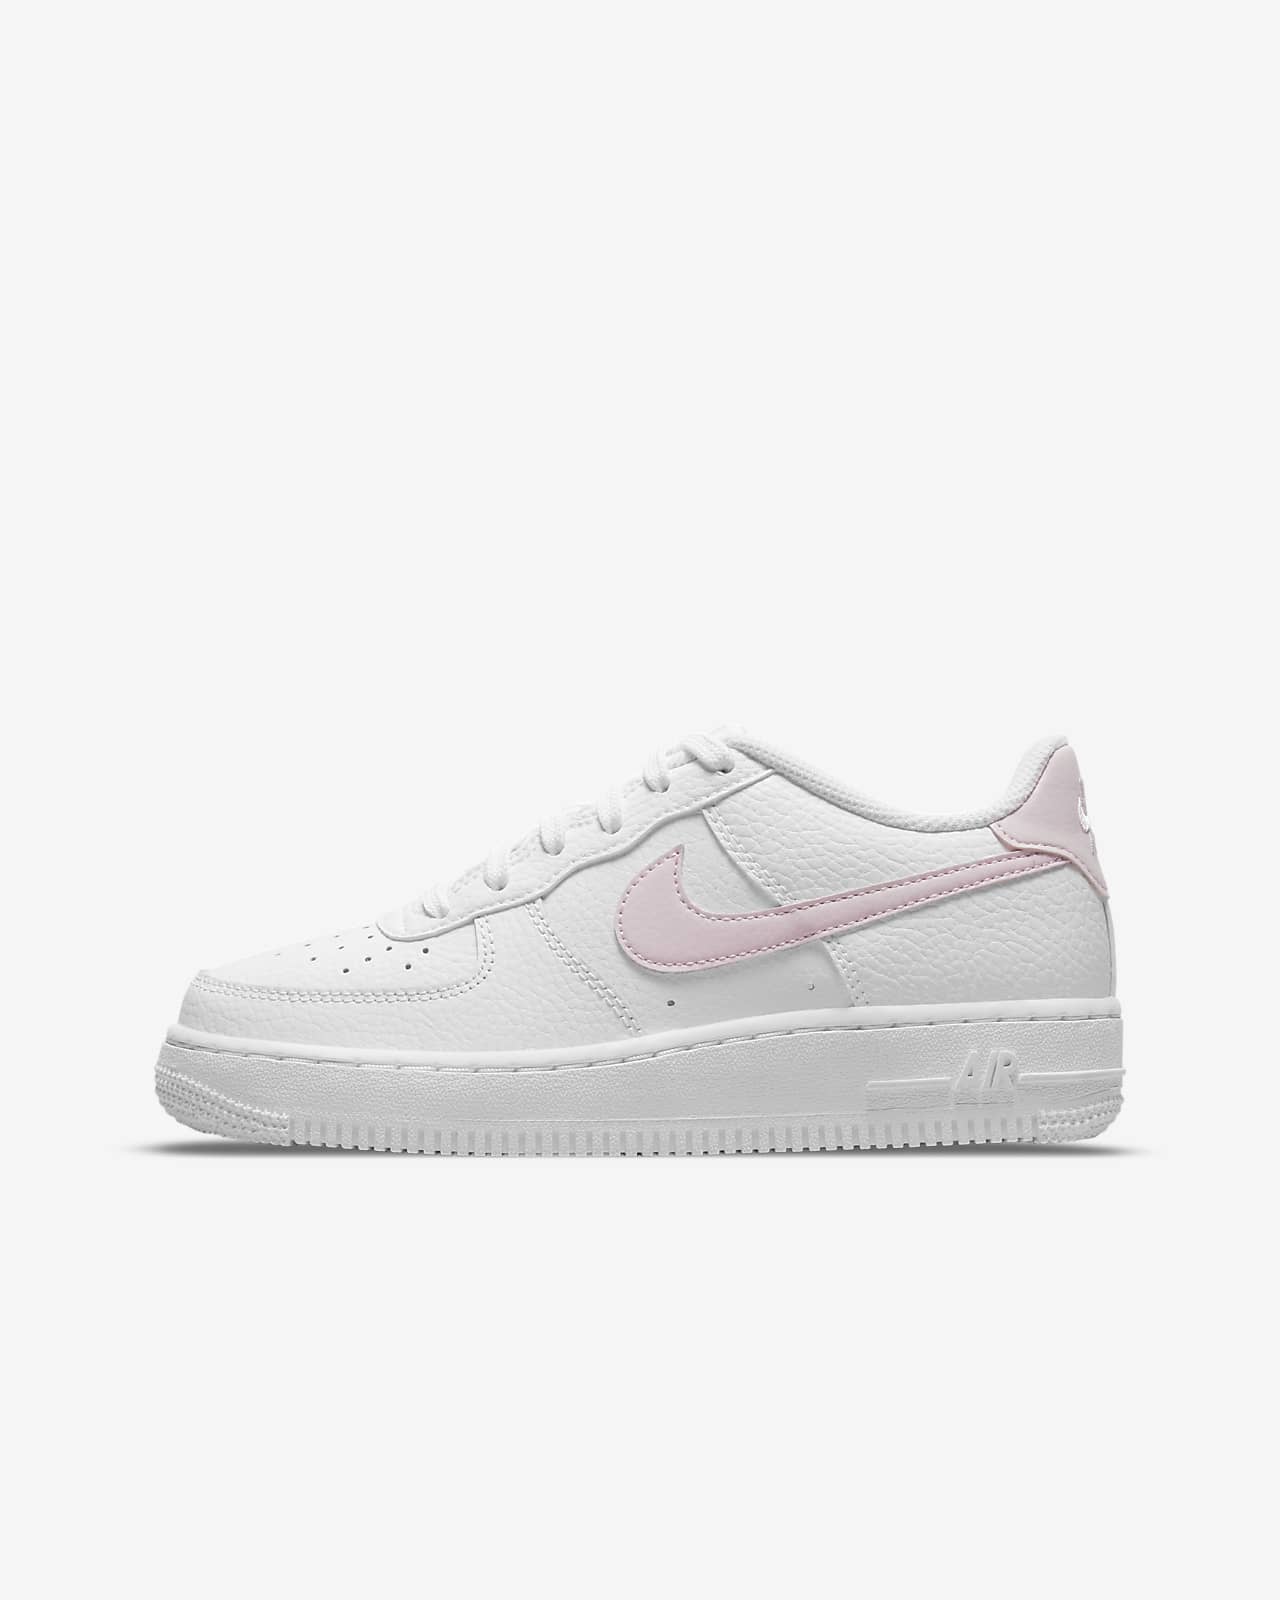 Chaussure Nike Air Force 1 pour ado